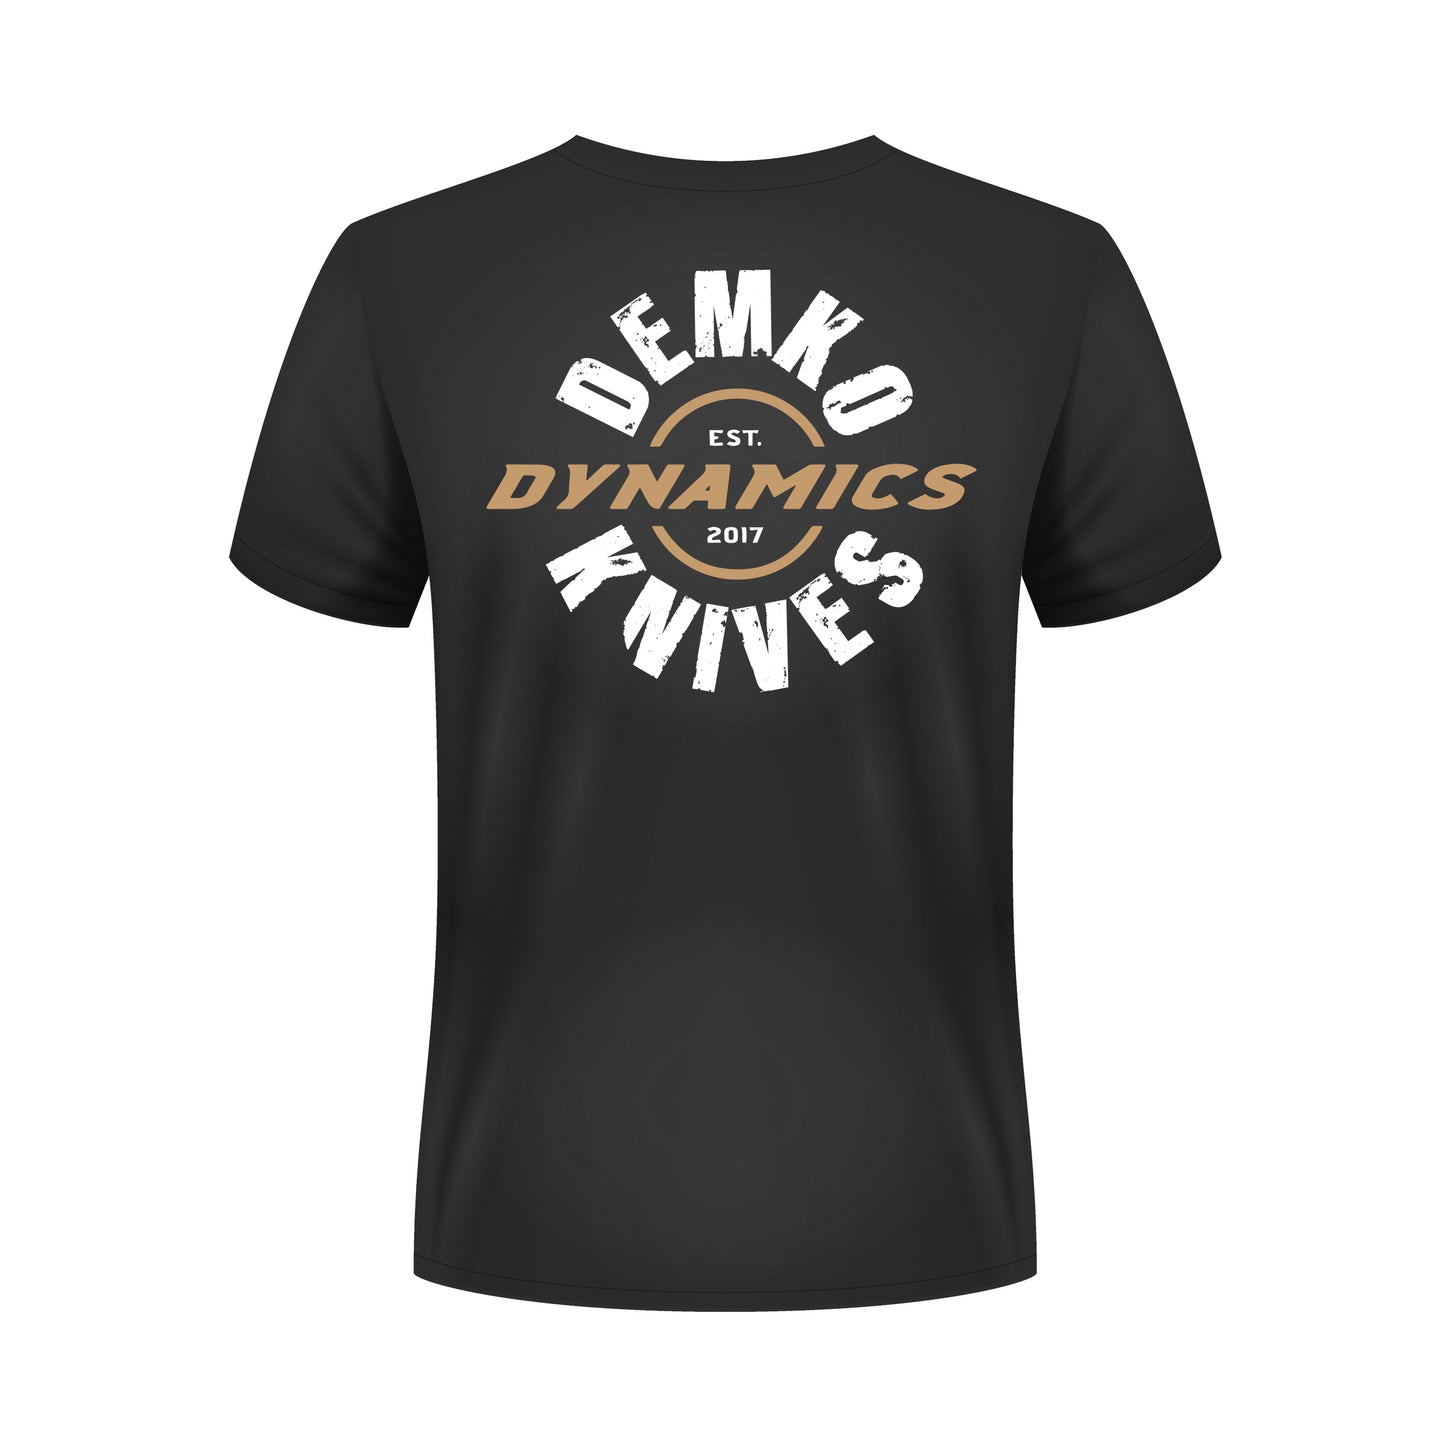 Demko Knives Dynamics Shirts